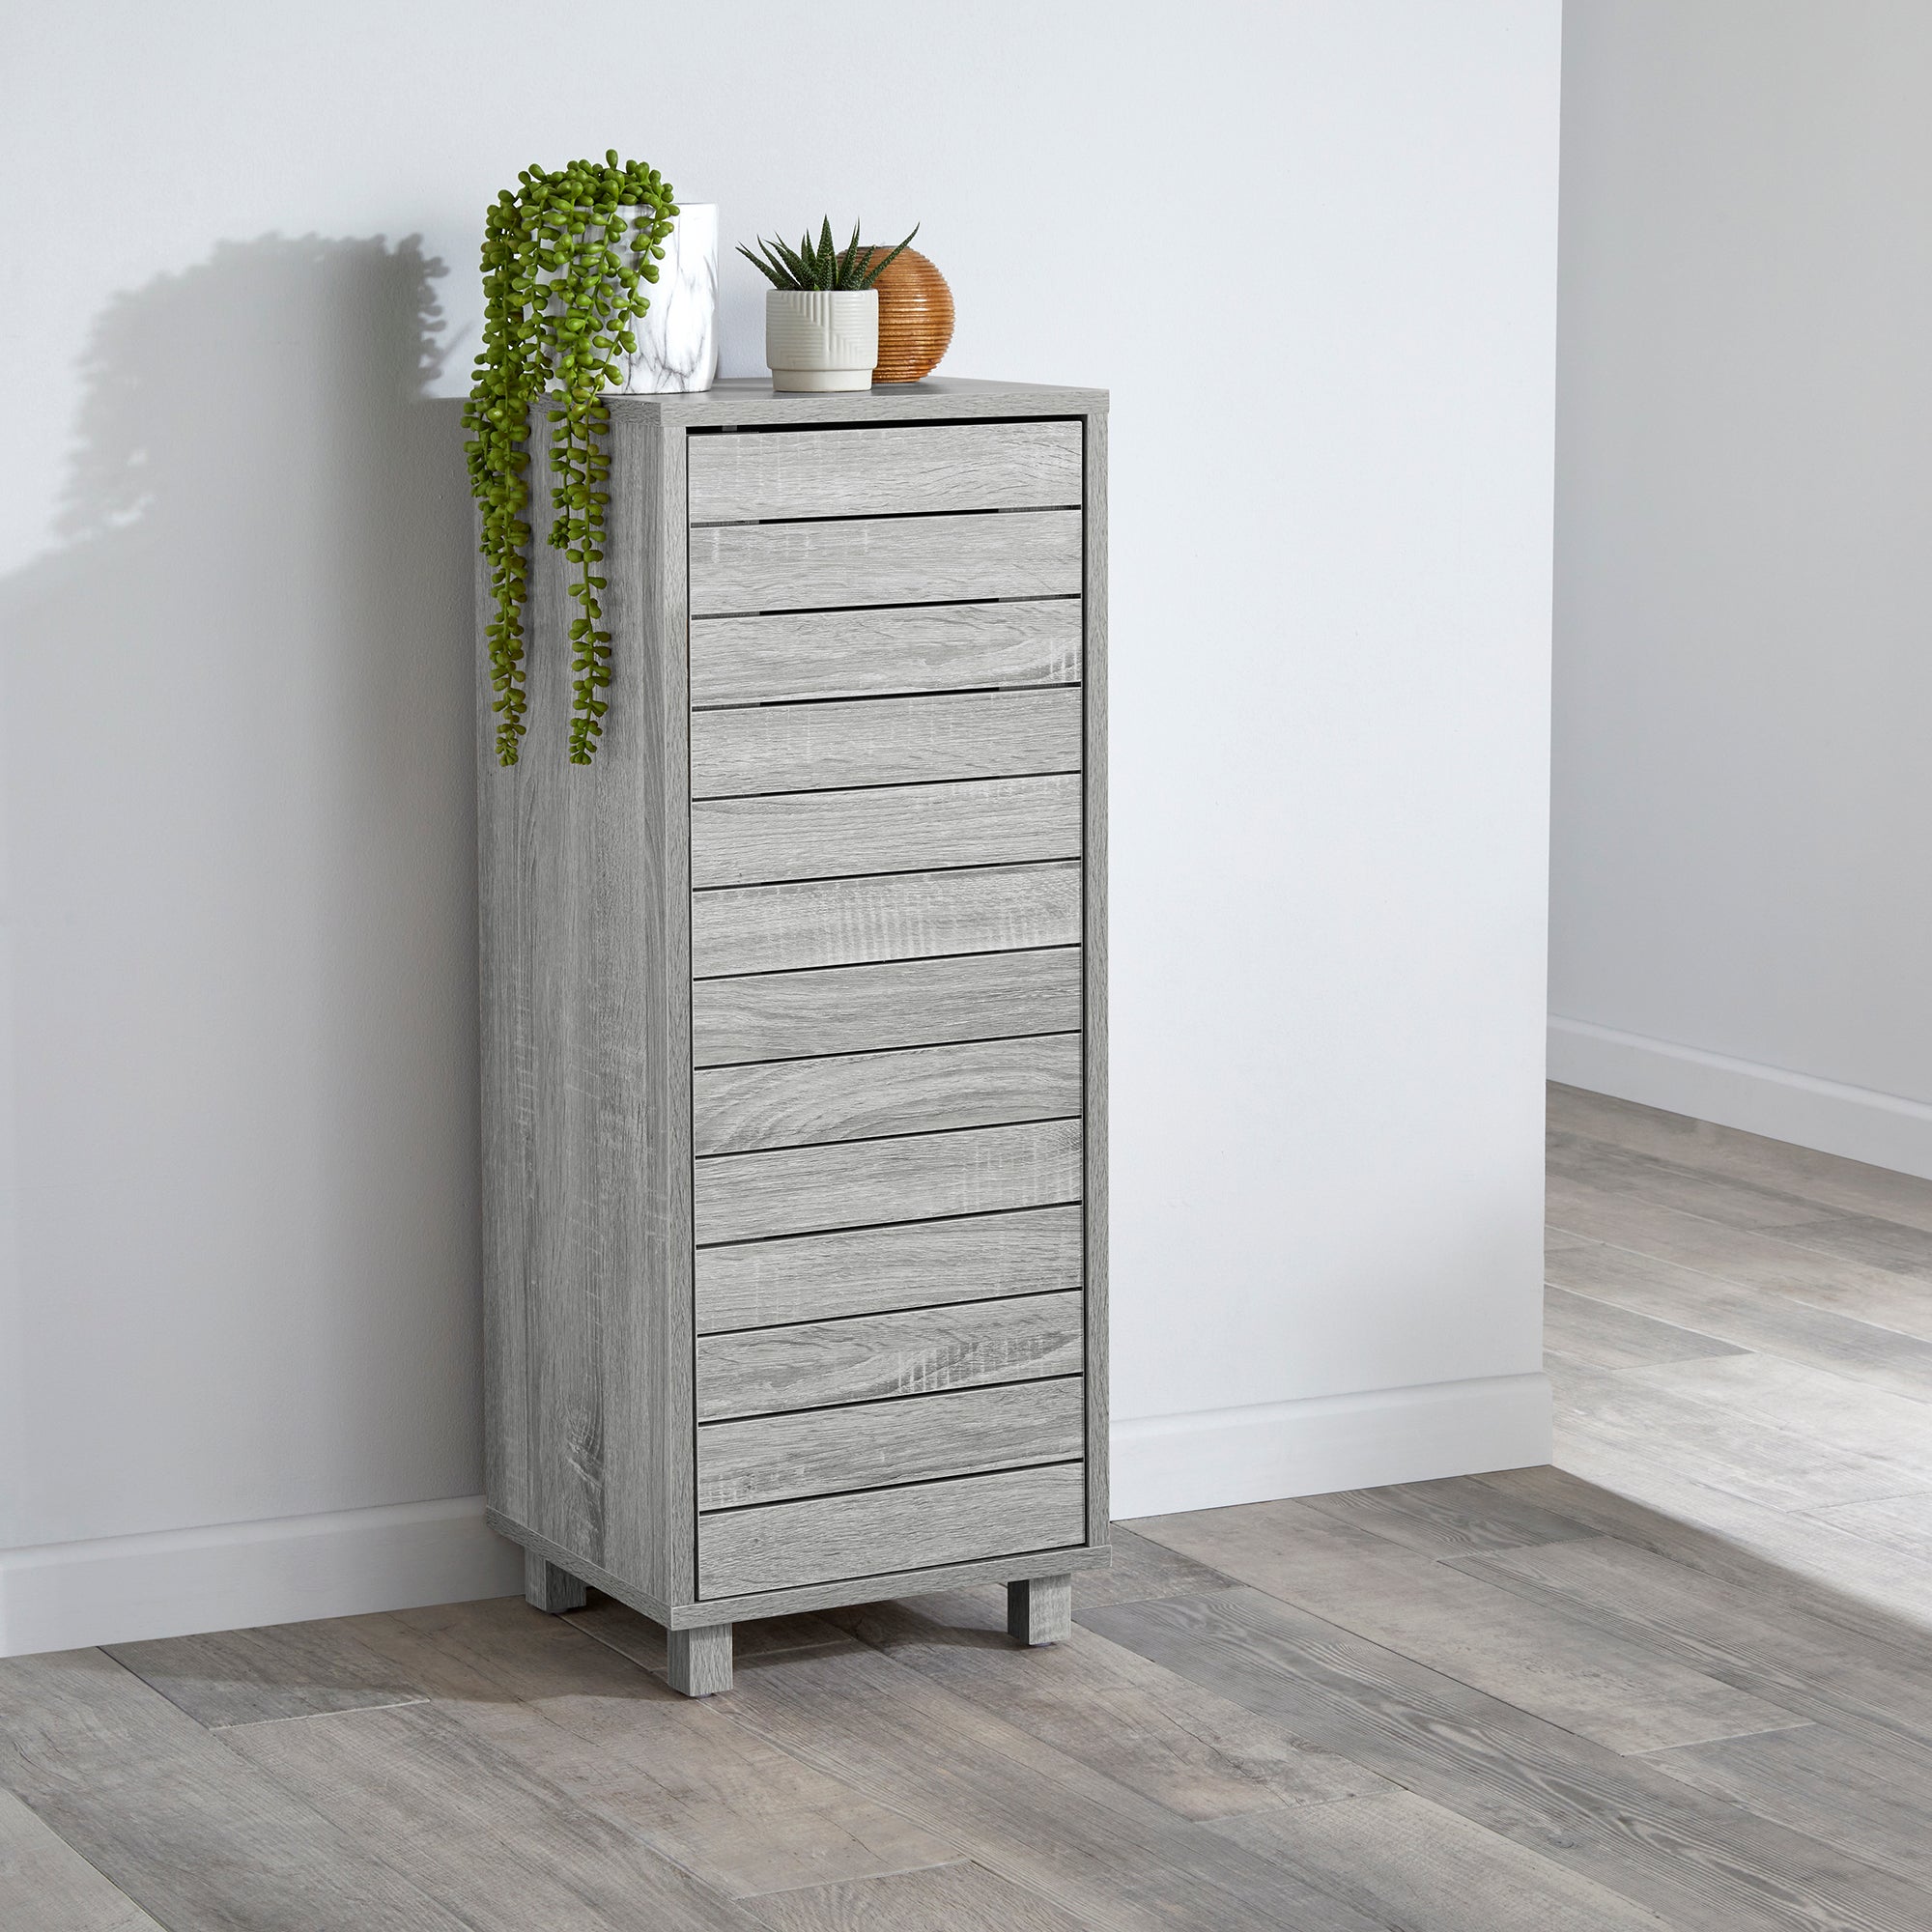 Maia Small Storage Cabinet, Grey Light Grey